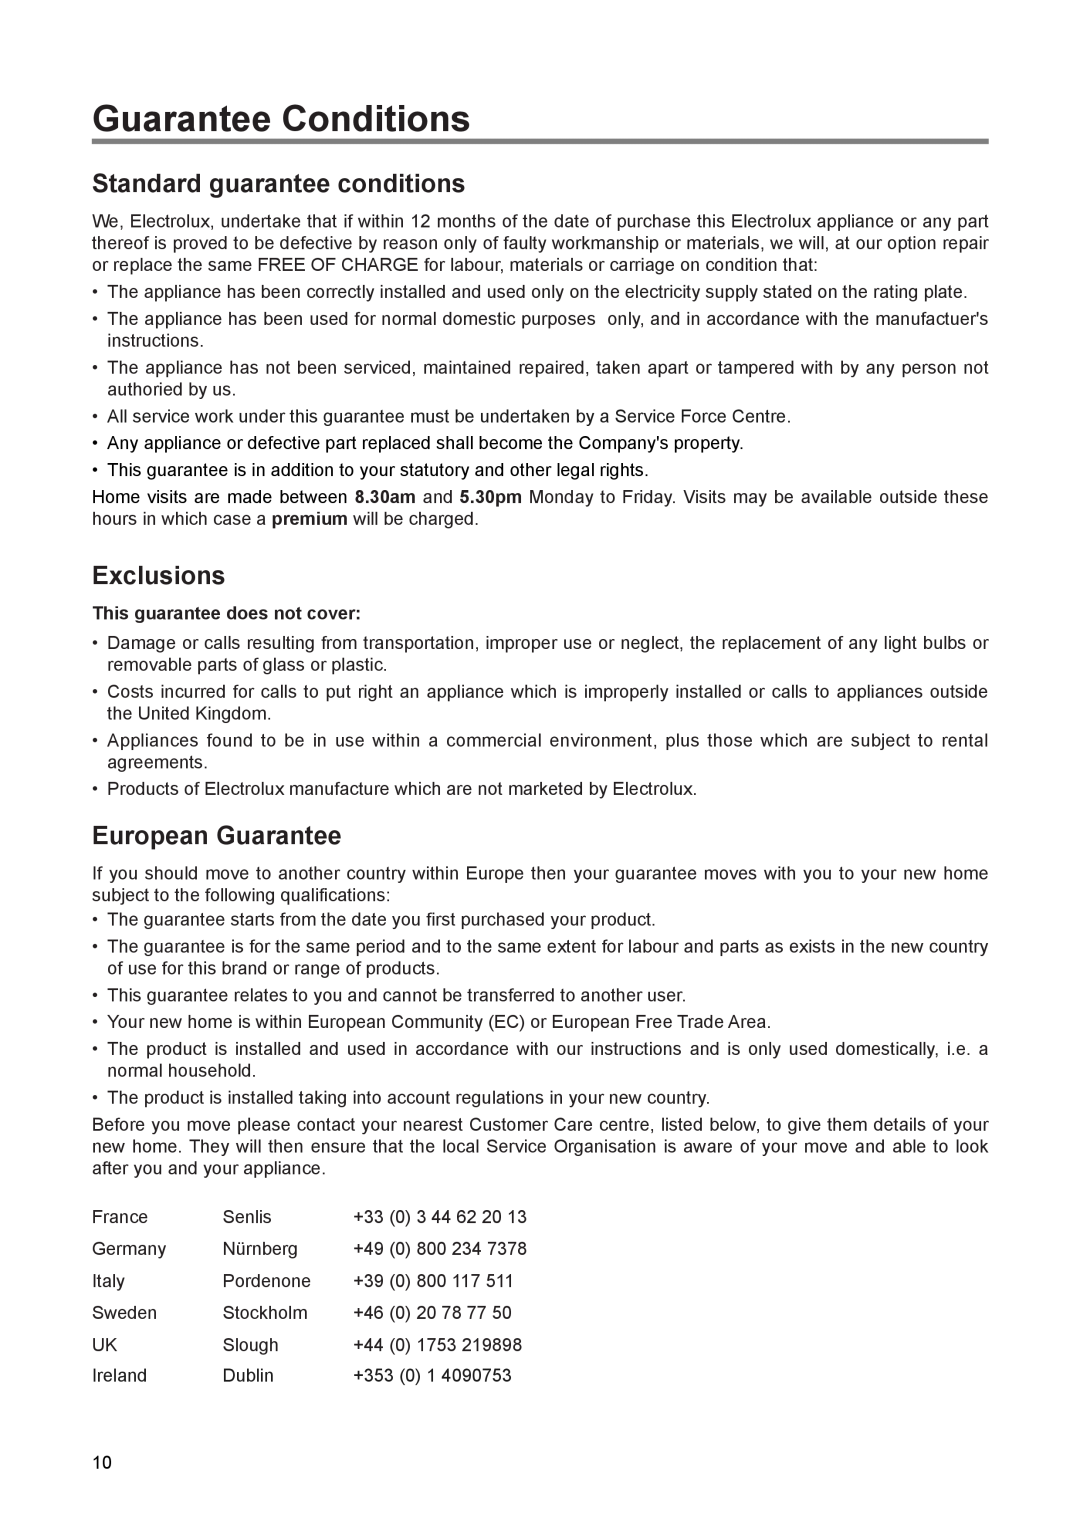 Electrolux ERN 1673 Guarantee Conditions, Standard guarantee conditions, Exclusions, European Guarantee, Ireland, Dublin 